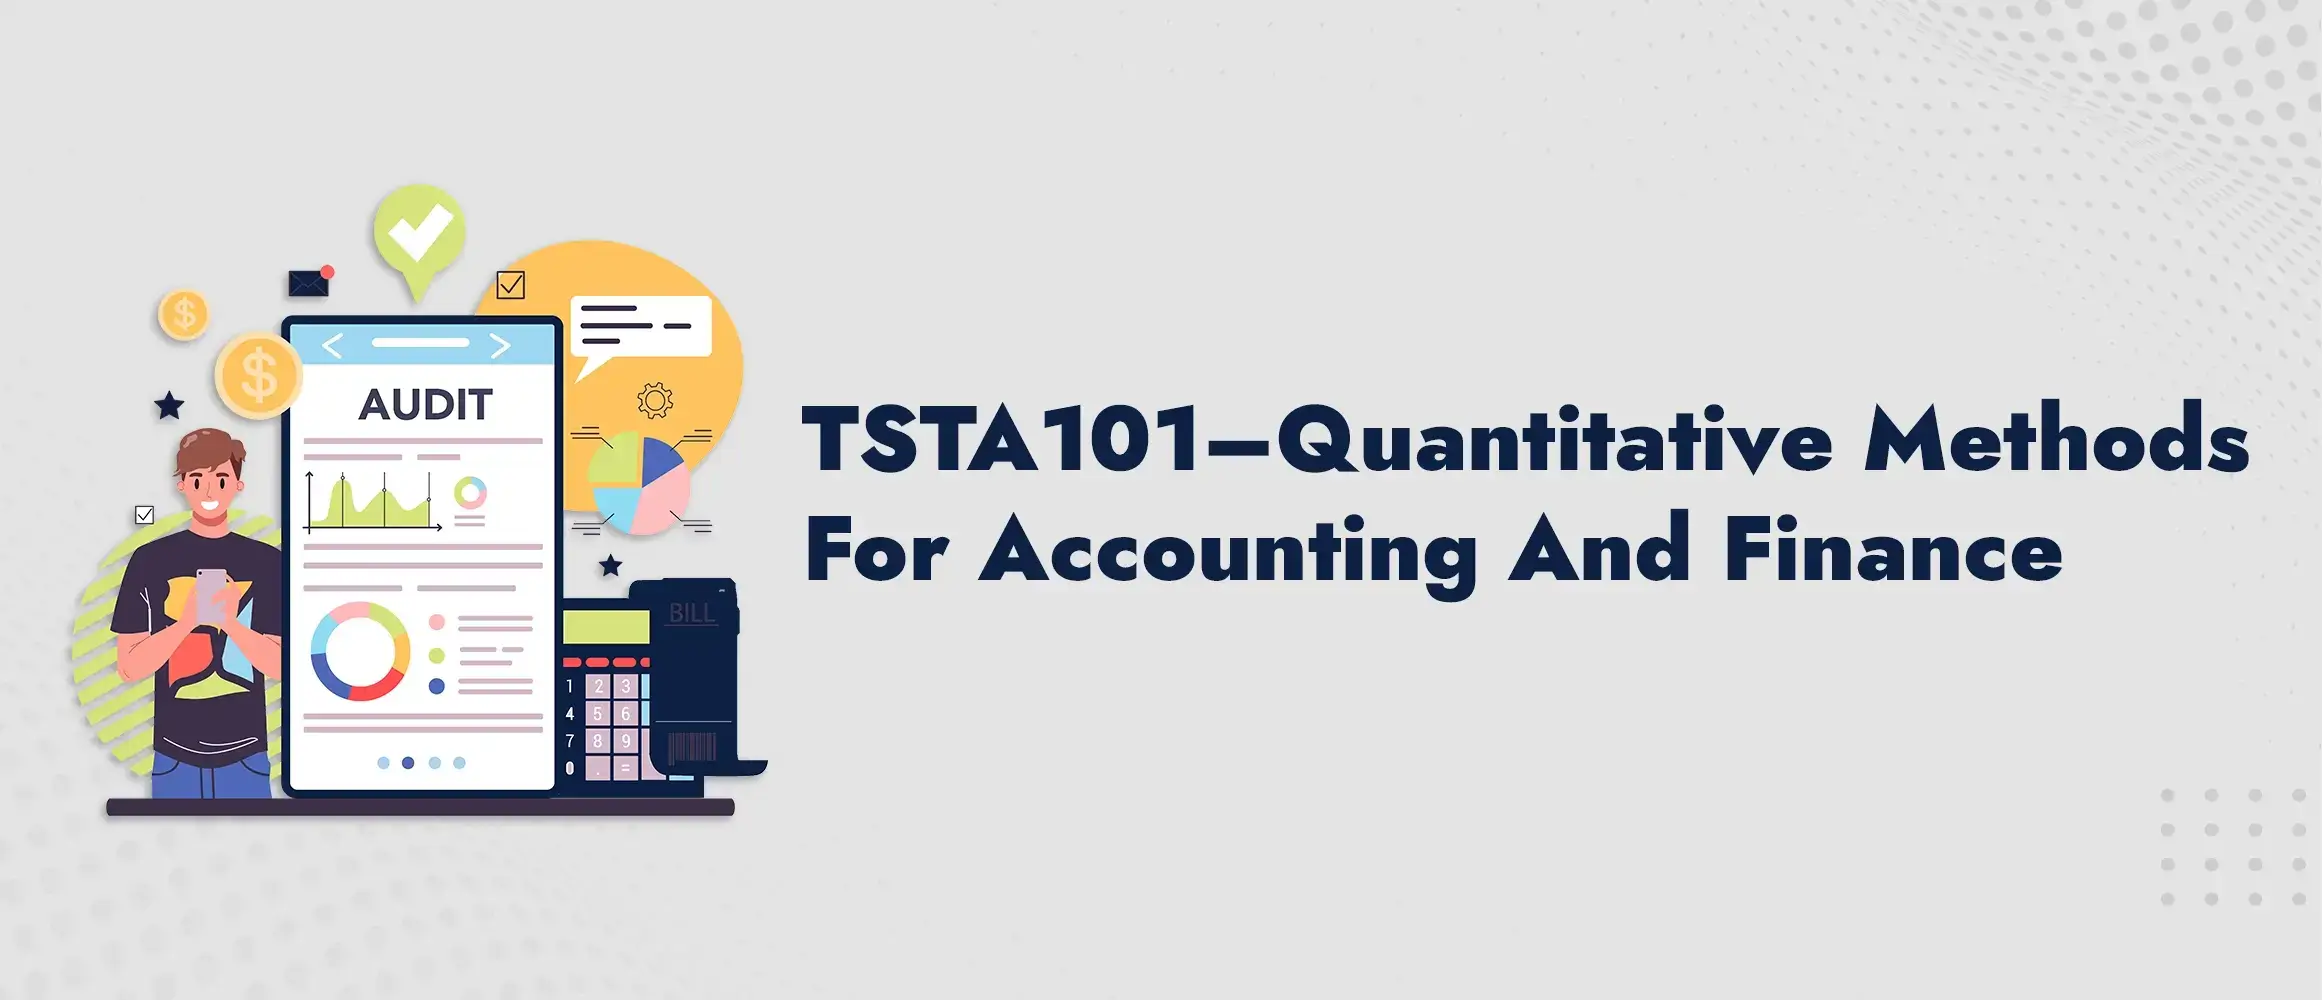 TSTA101 Quantitative Methods For Accounting And Finance